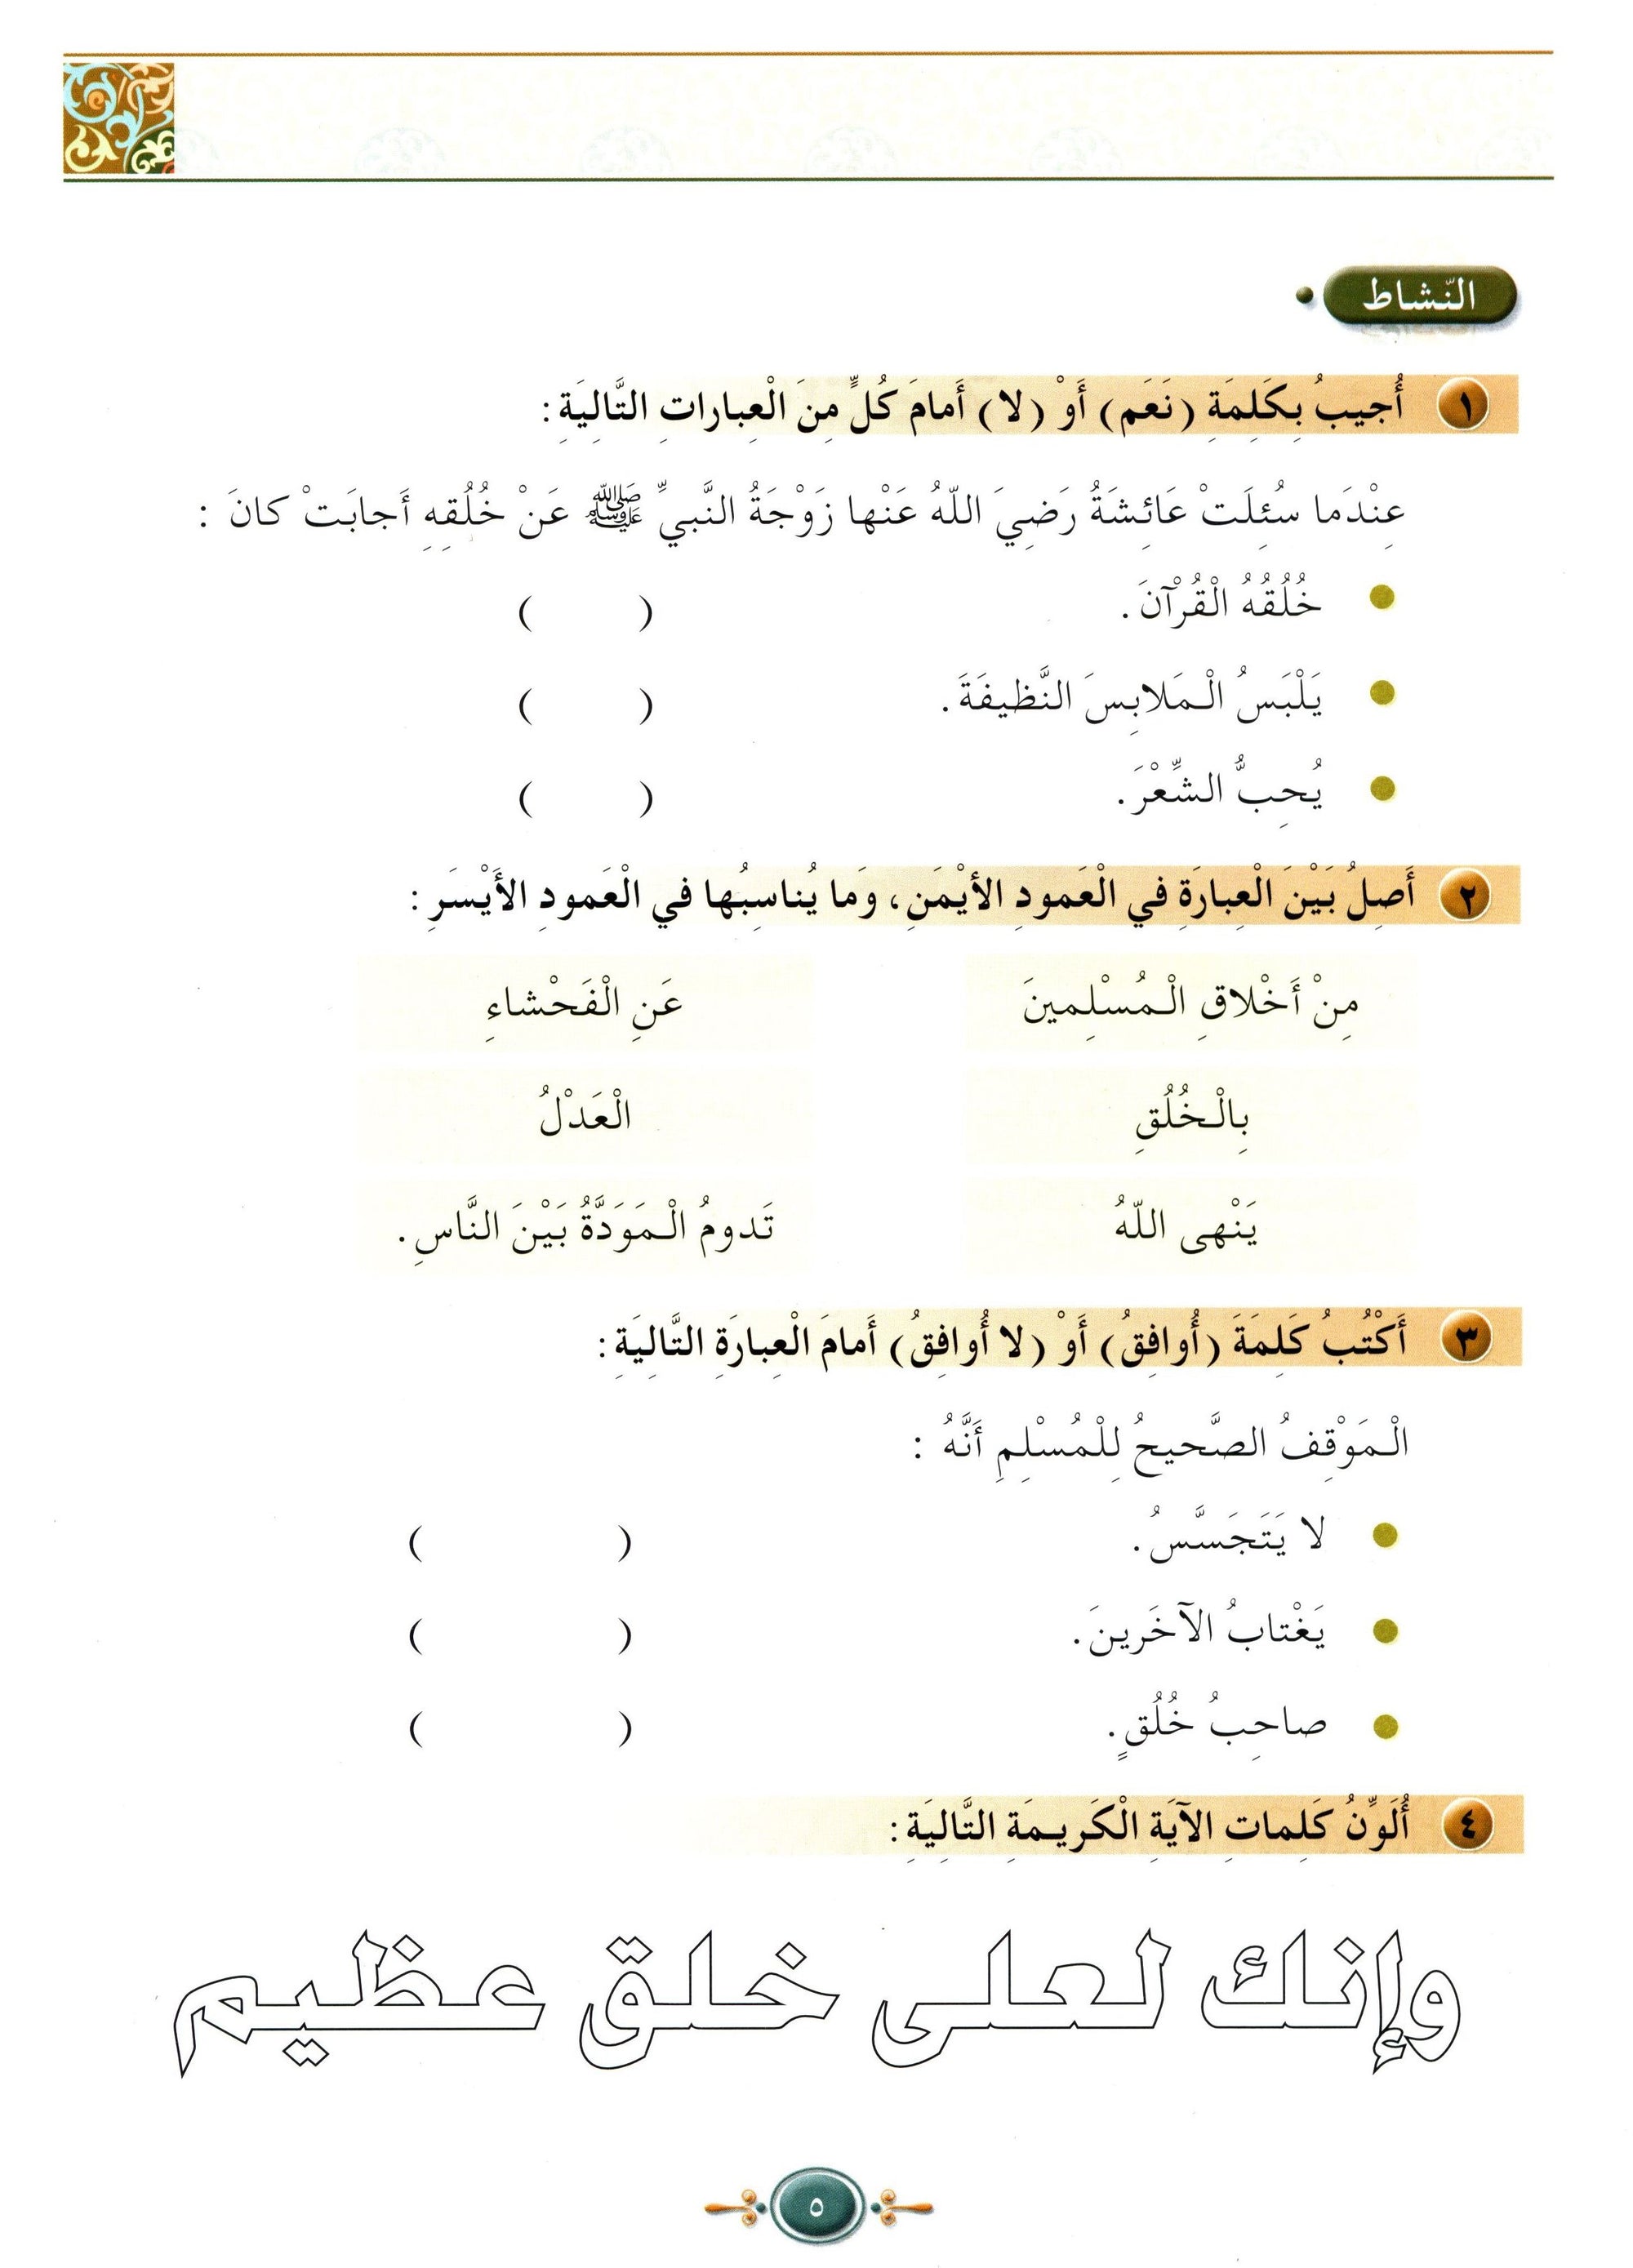 Islamic Knowledge Series - Morality and Ethics Book 3 Part 1 سلسلة العلوم الإسلامية أخلاق و اّداب